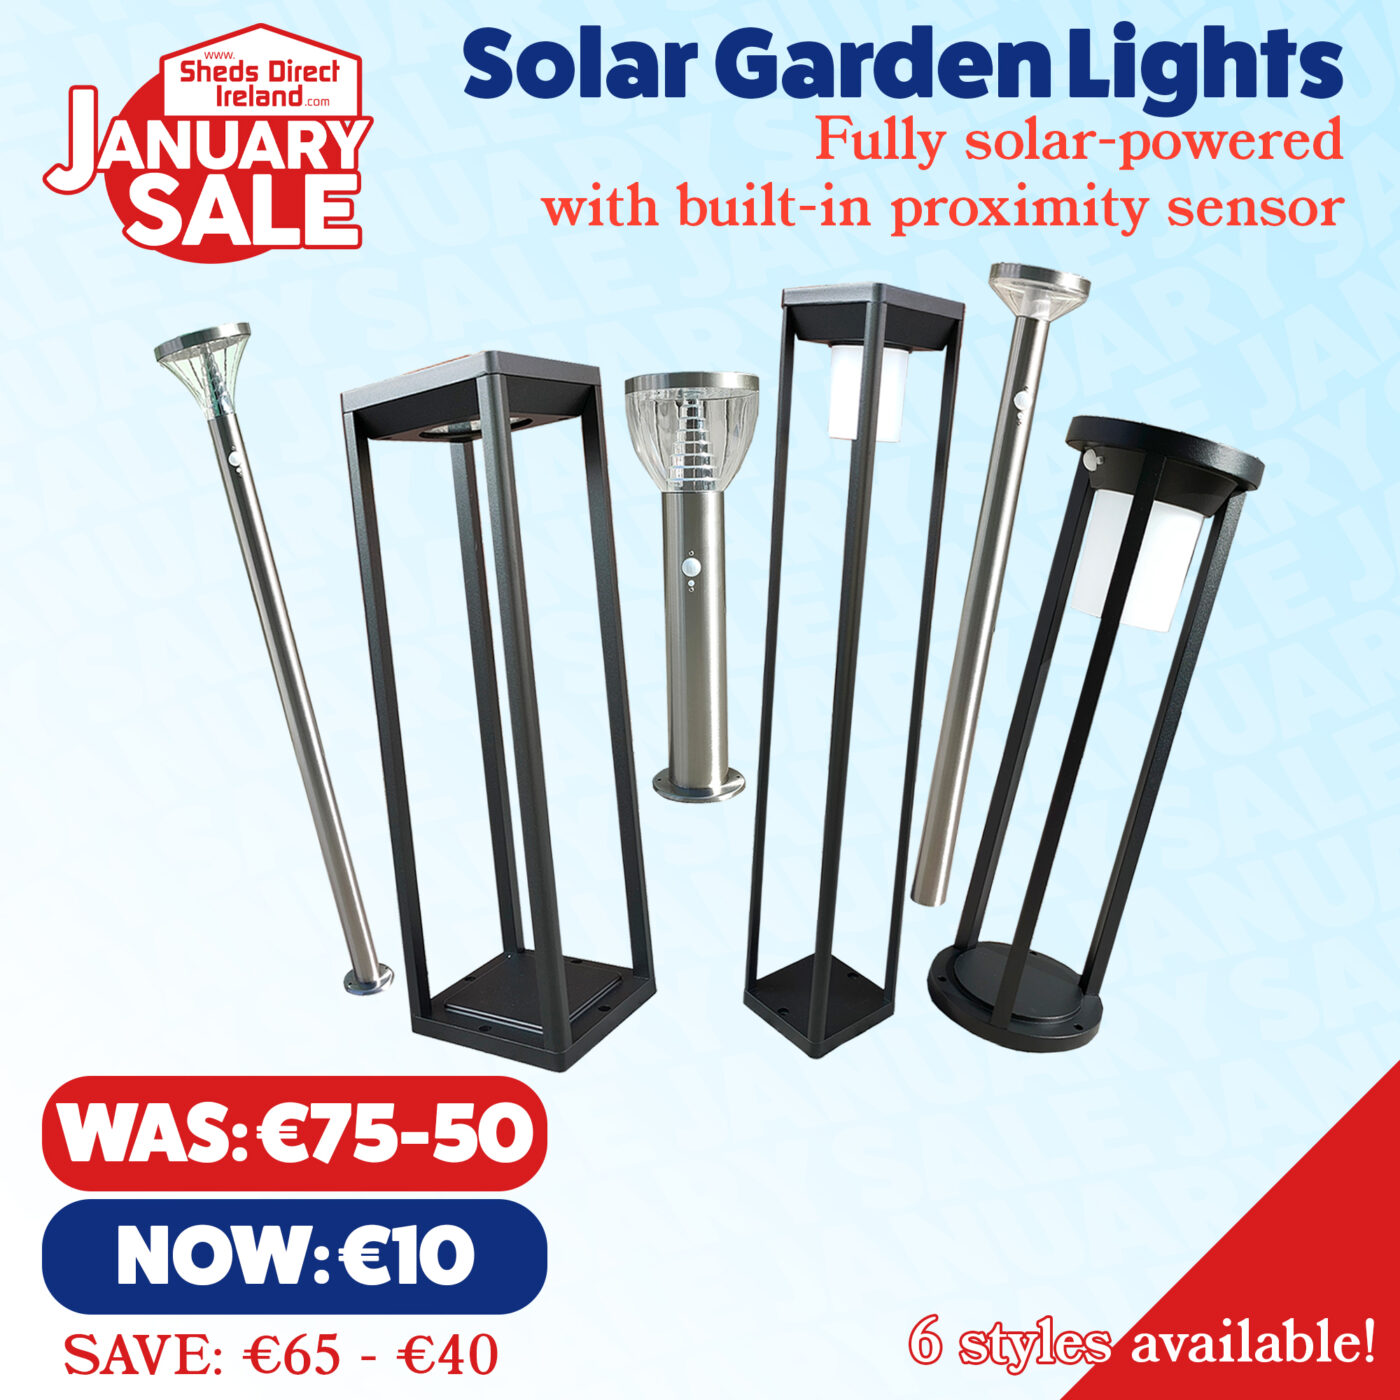 January Sale - Solar Powered Lights